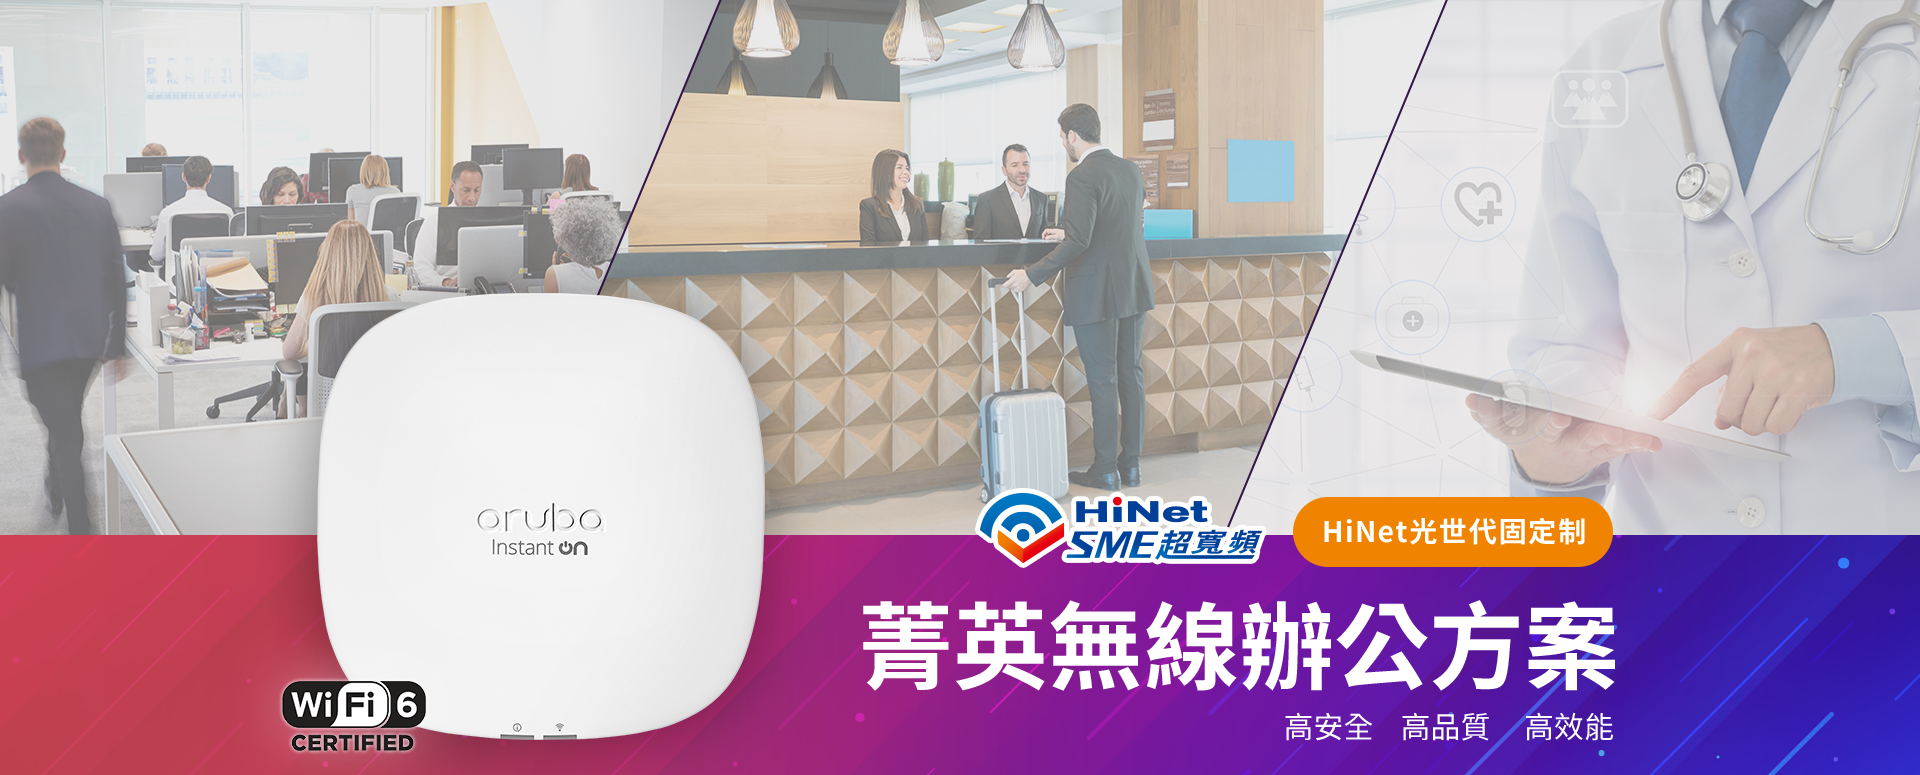 Hinet光世代固定制 菁英無線辦公方案 高安全 高品質 高效能